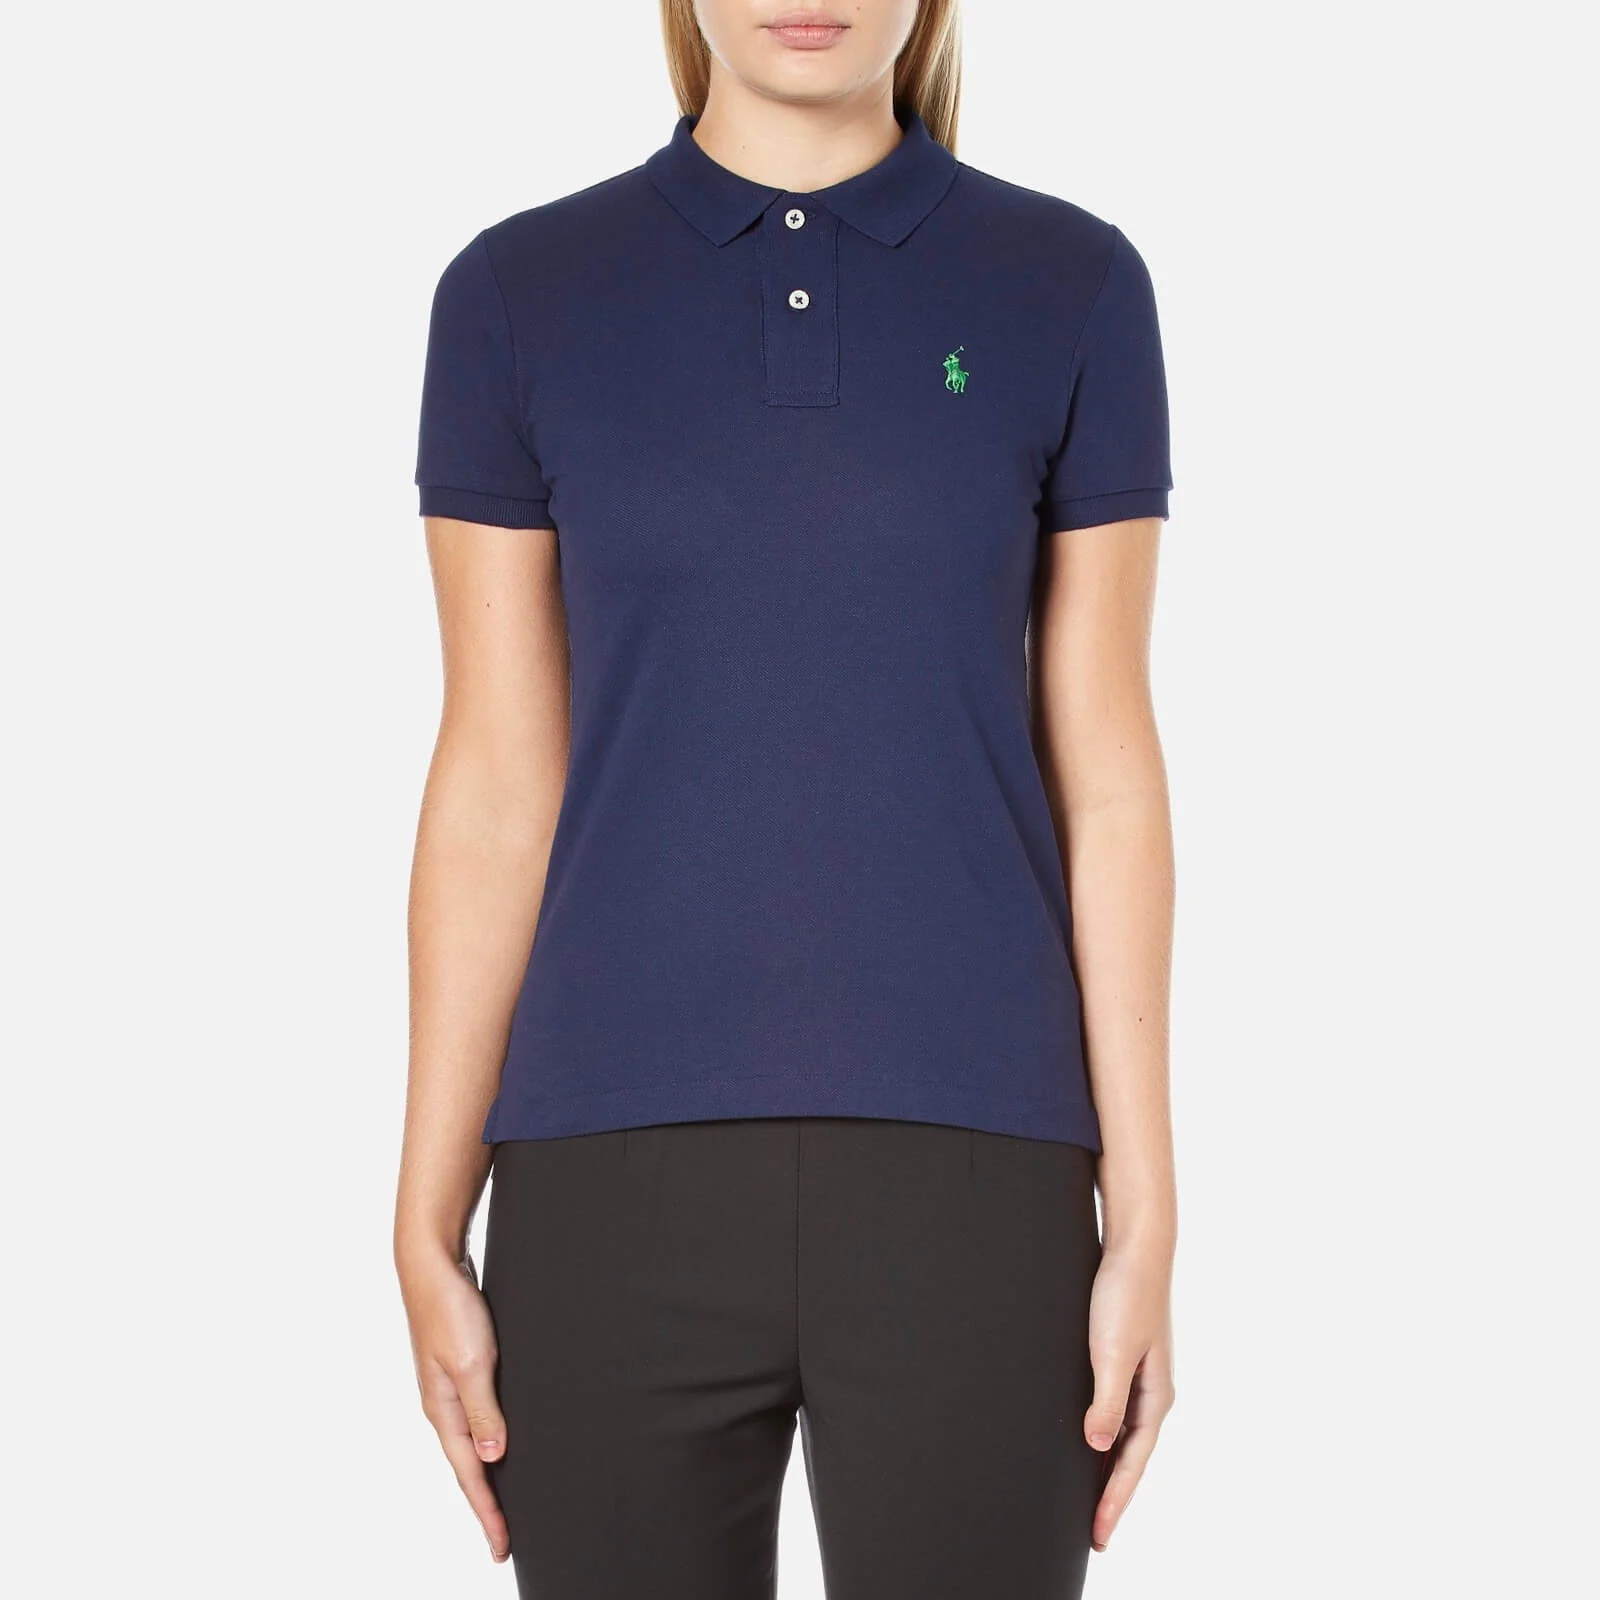 Polo Ralph Lauren Women's Skinny Fit Polo Shirt - Navy Image 1